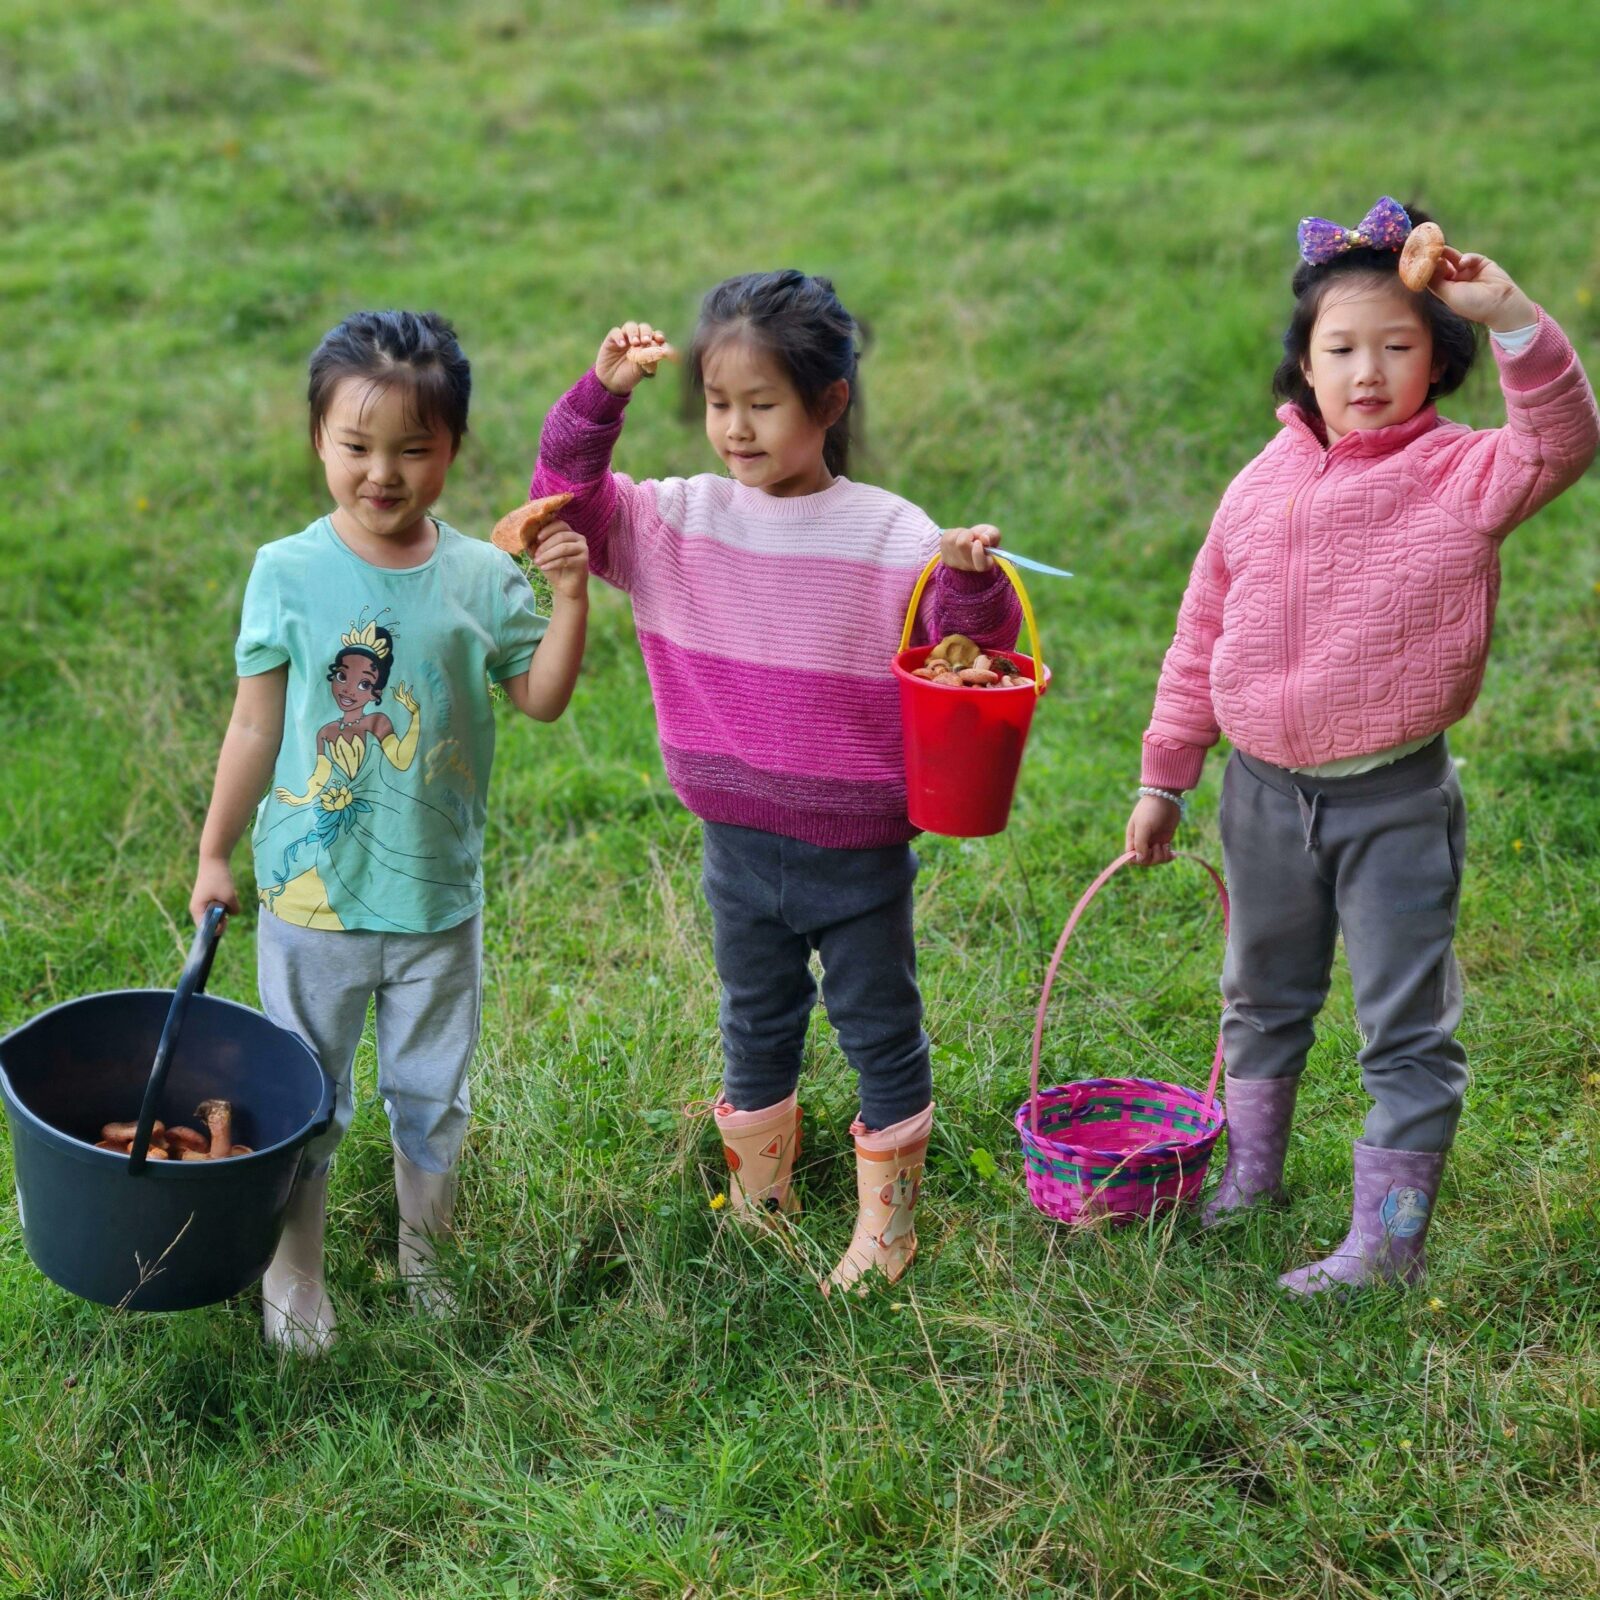 Three children standing on grass with baskets of wild mushorooms